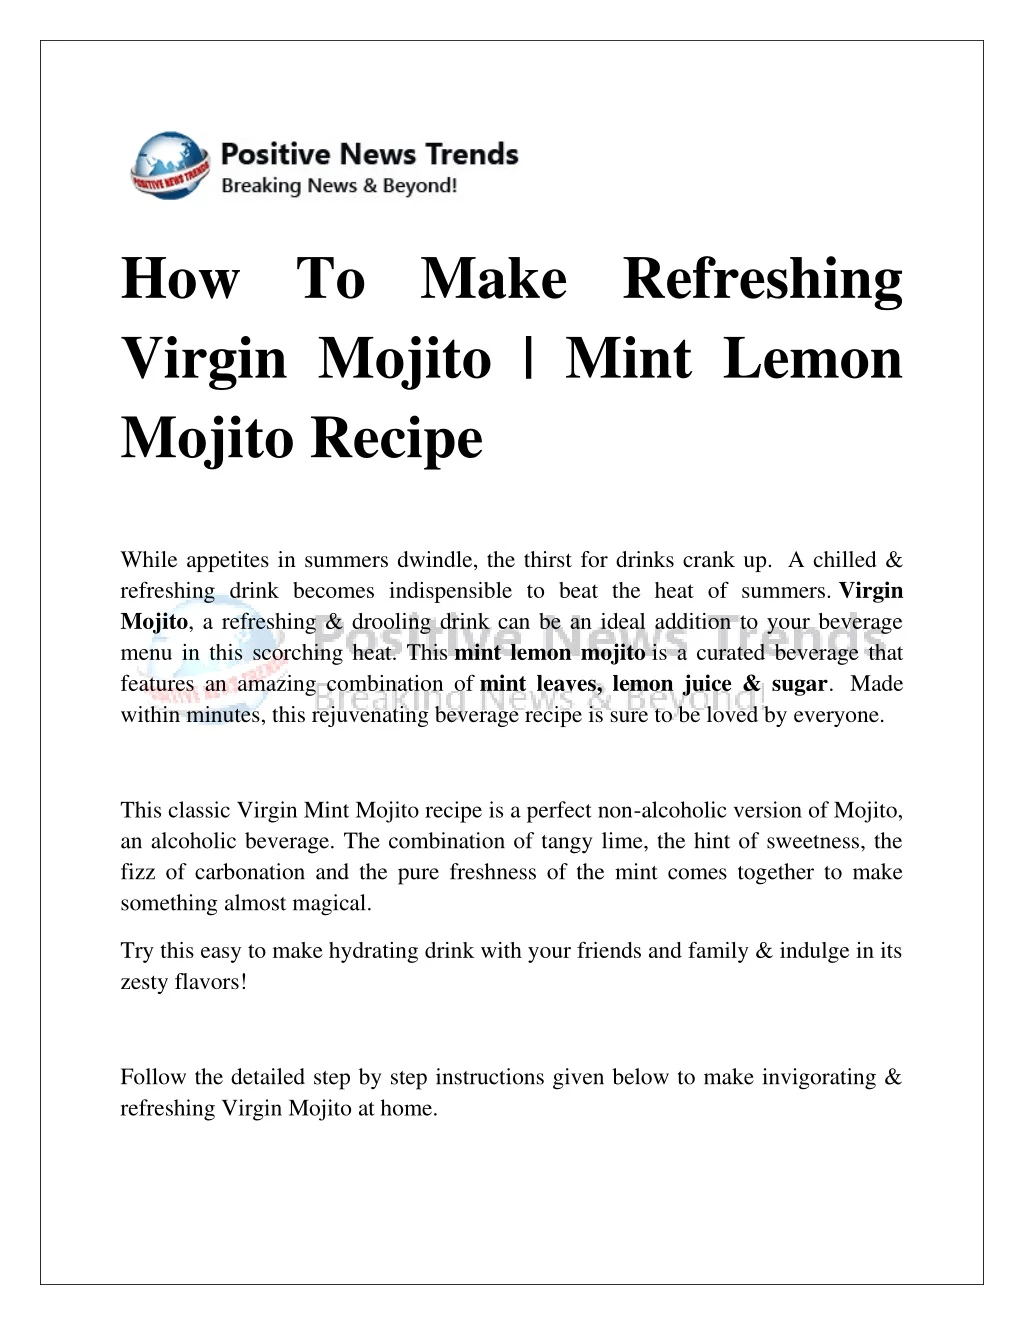 how to make refreshing virgin mojito mint lemon